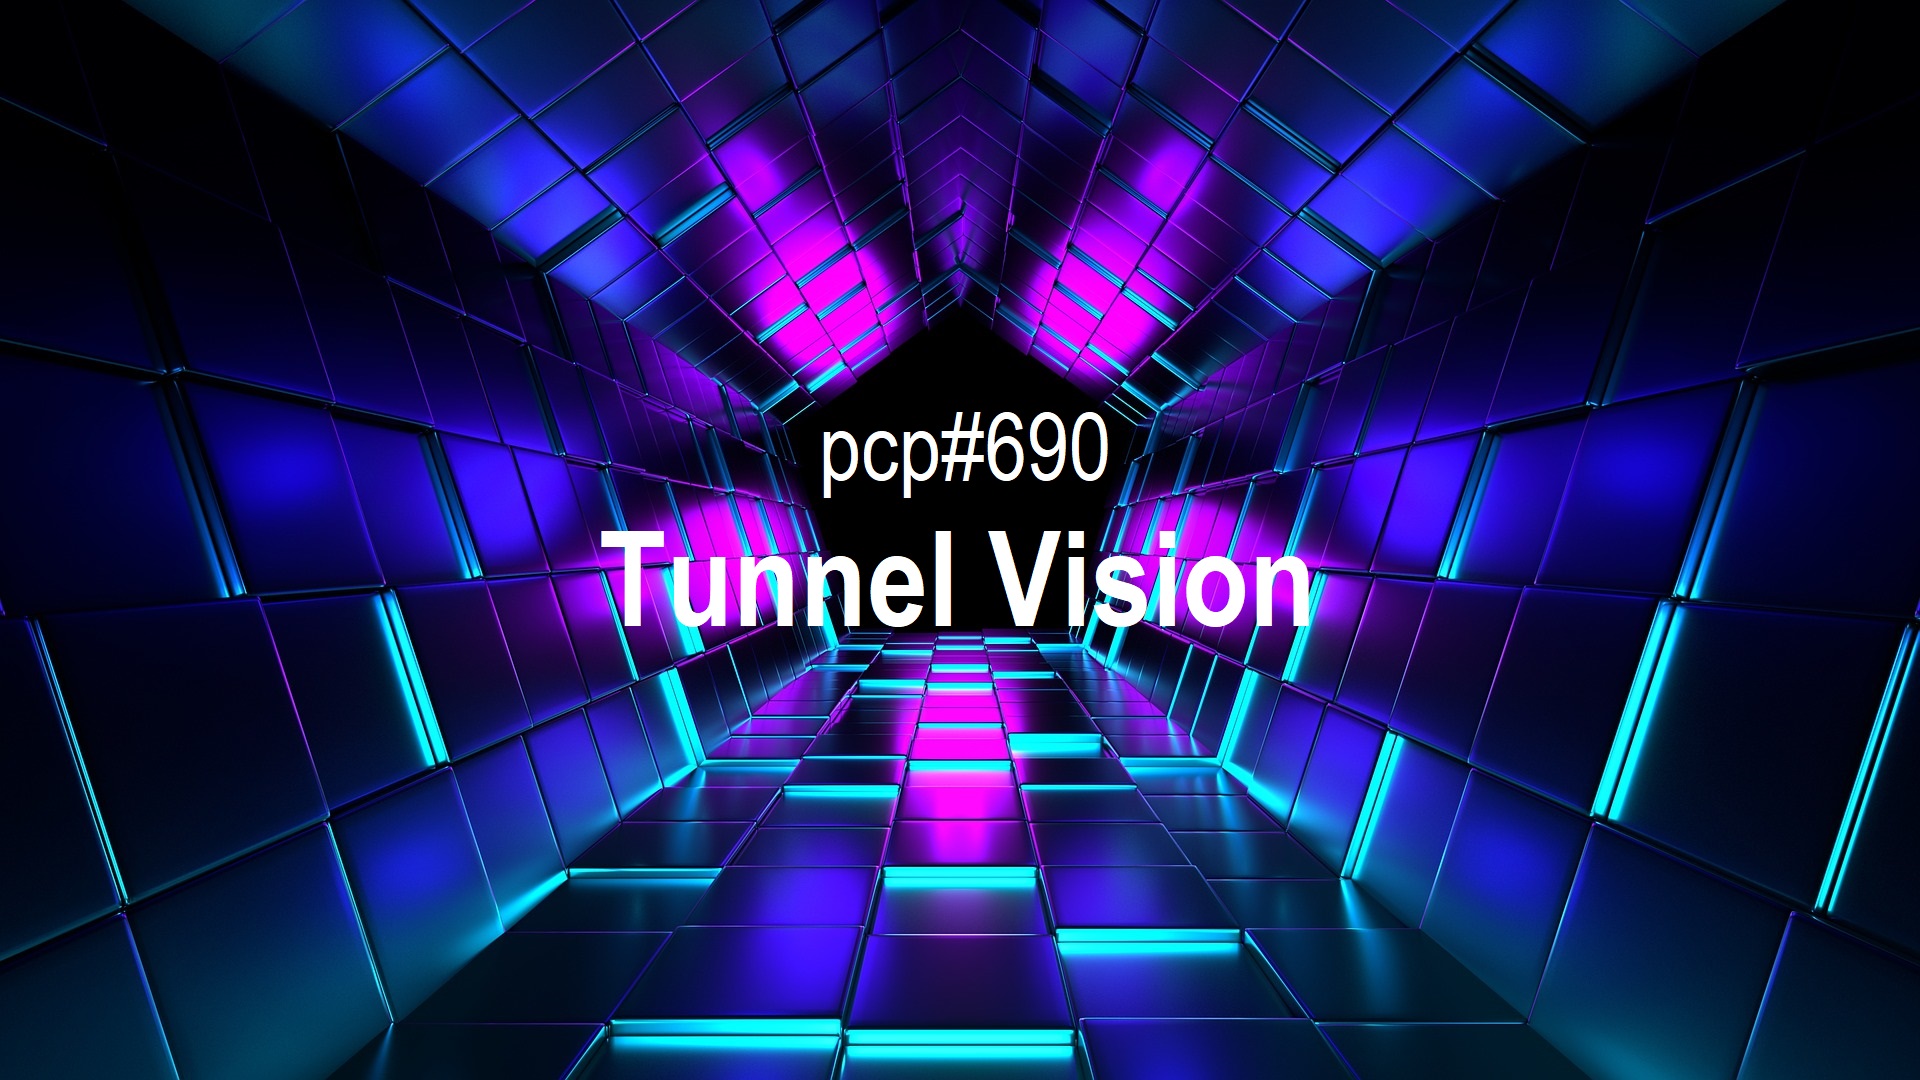 PCP#690... Tunnel Vision!